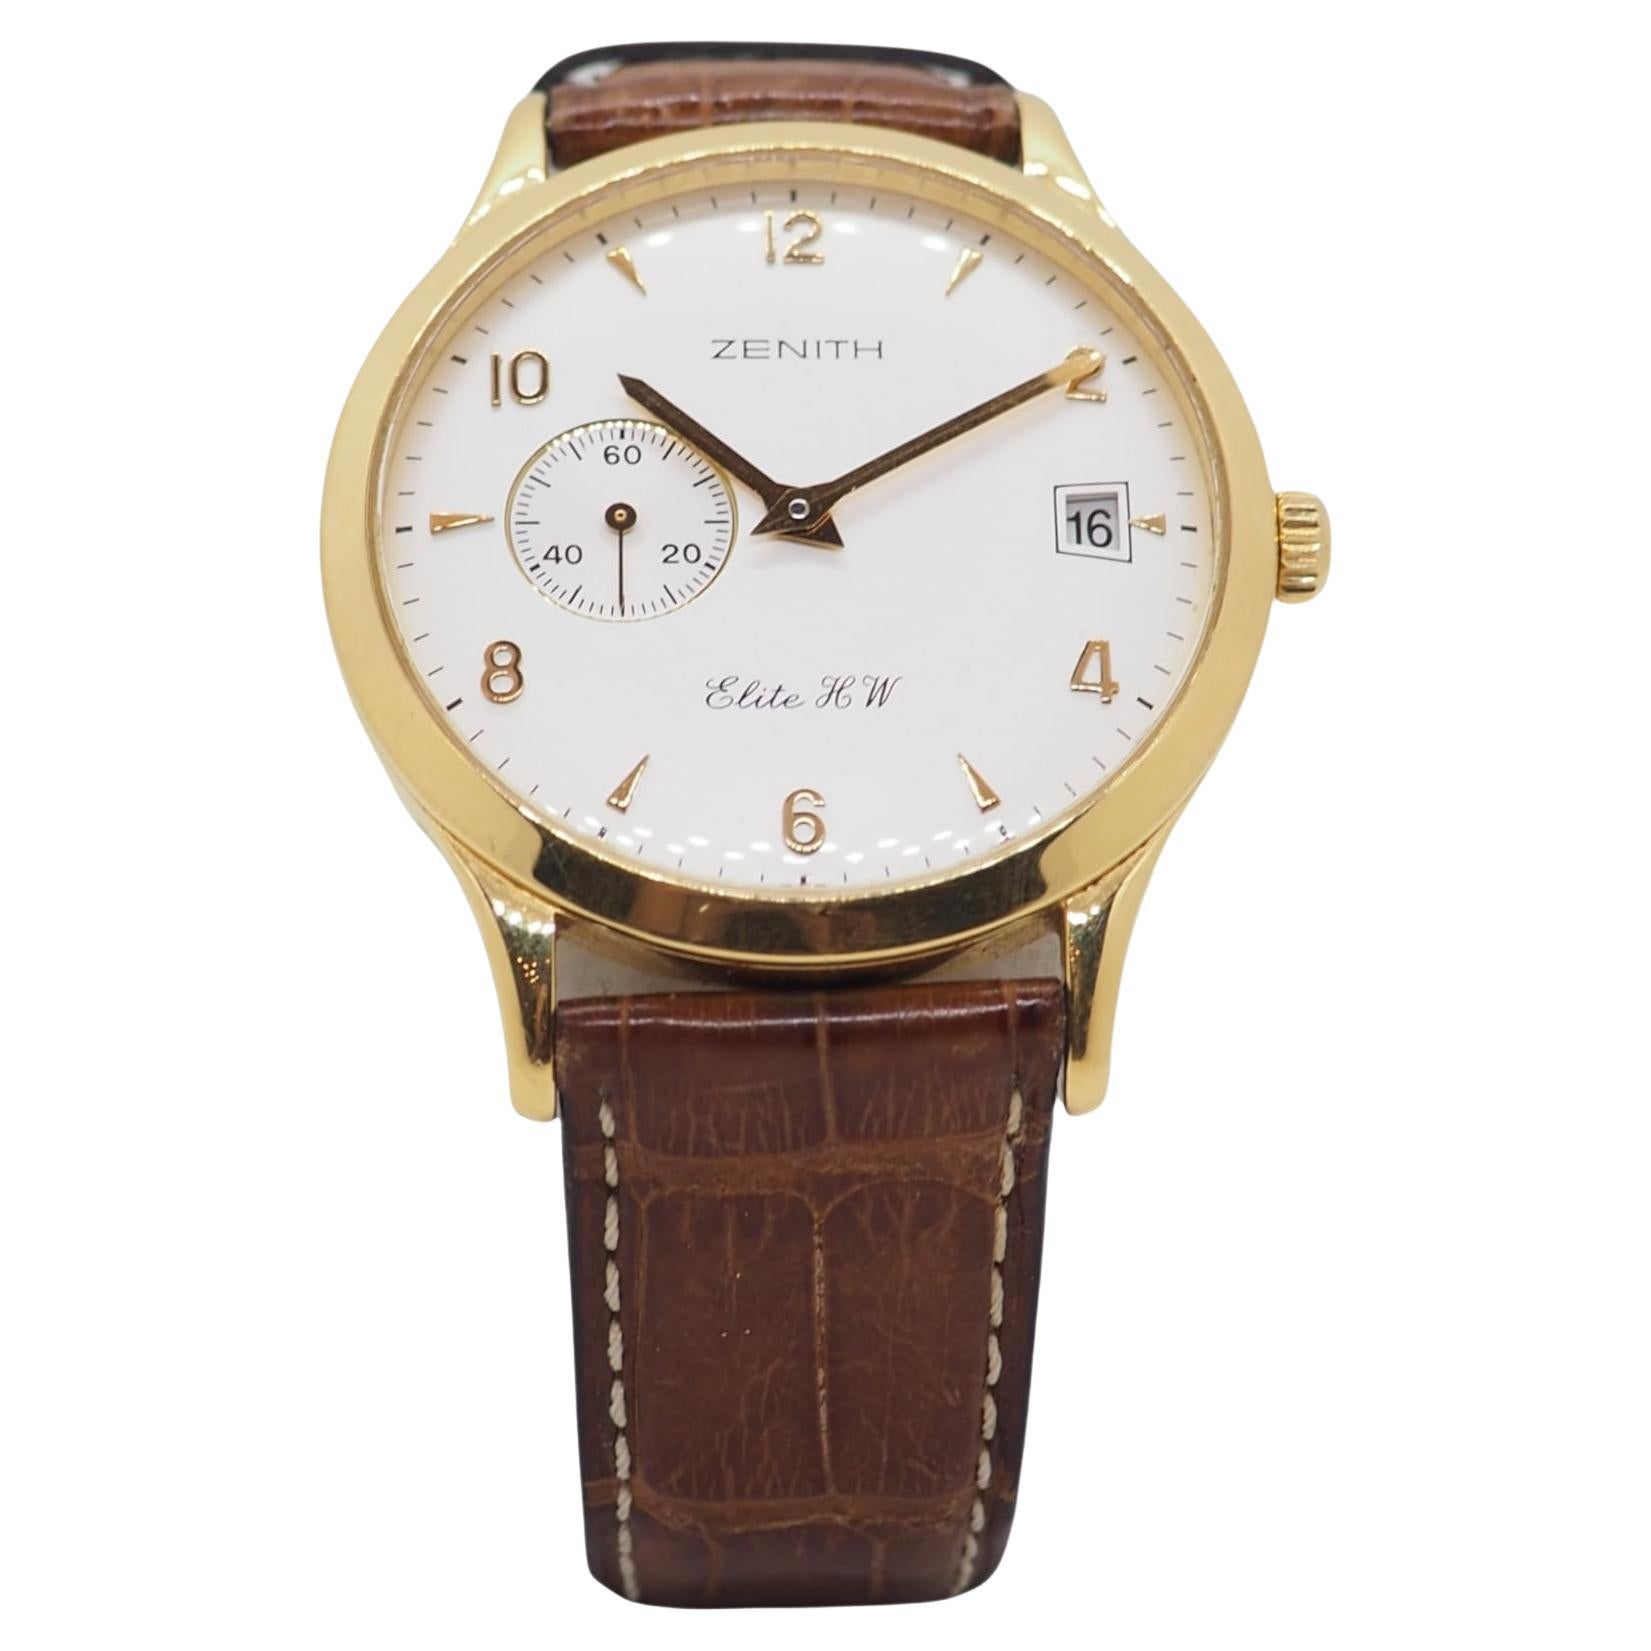 Vintage Watch Zenith Elite HW 18K Solid Yellow Gold Wrist Watch Men For Sale